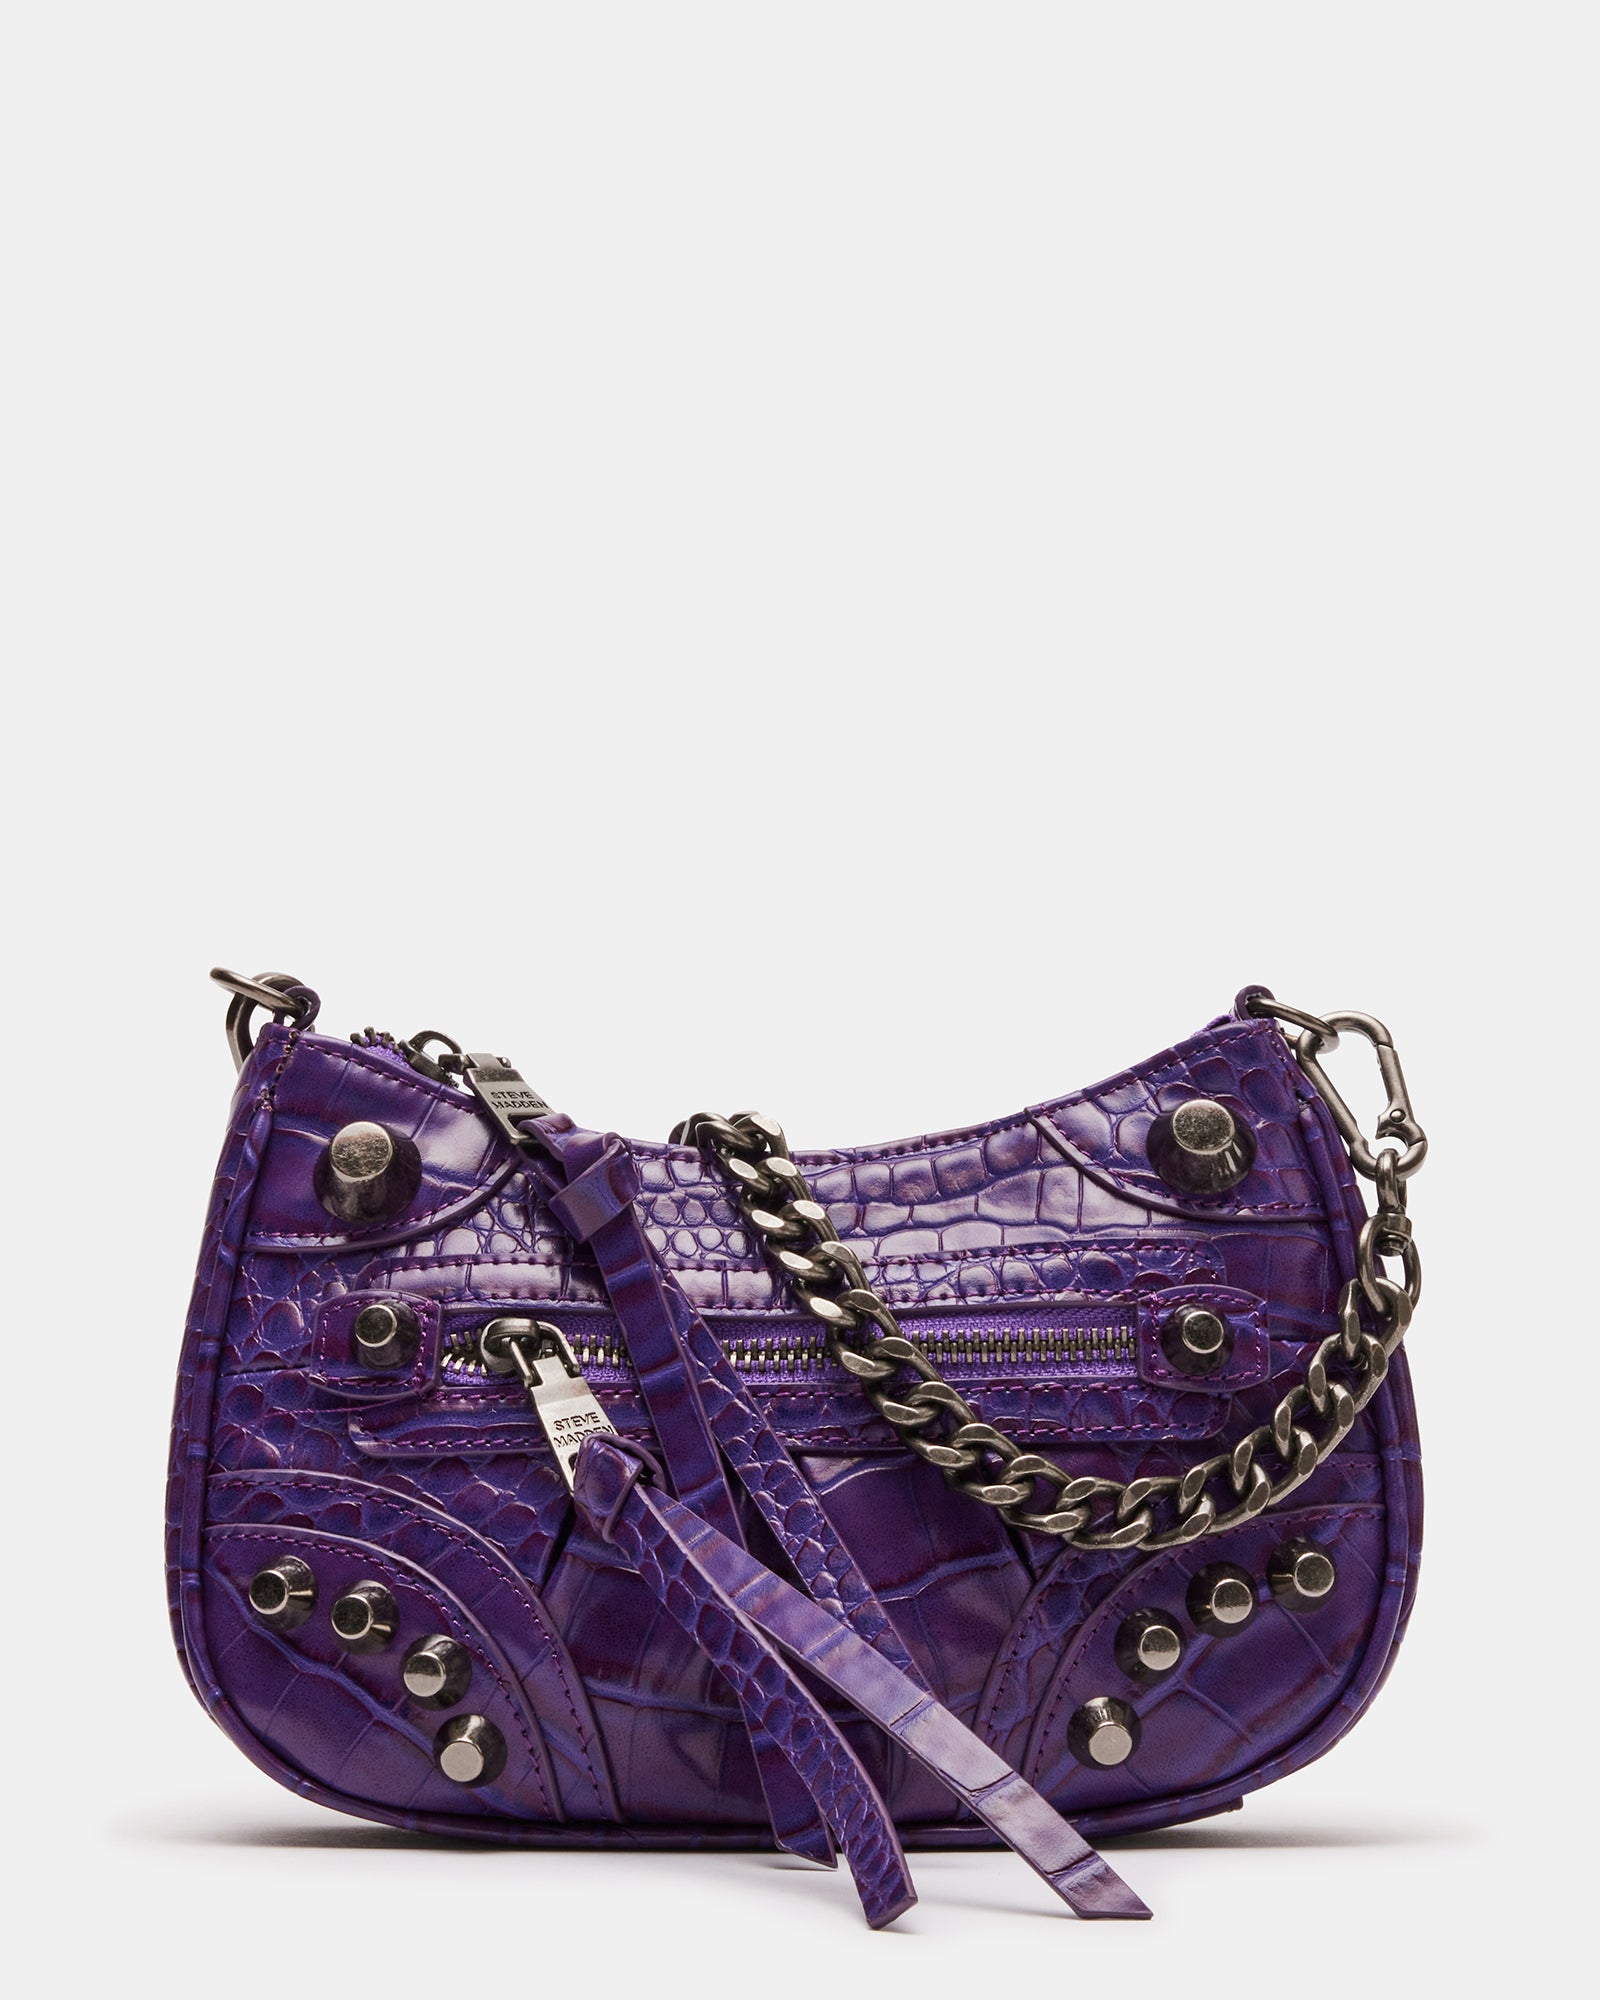 Steve Madden - Authenticated Handbag - Leather Beige Plain for Women, Good Condition